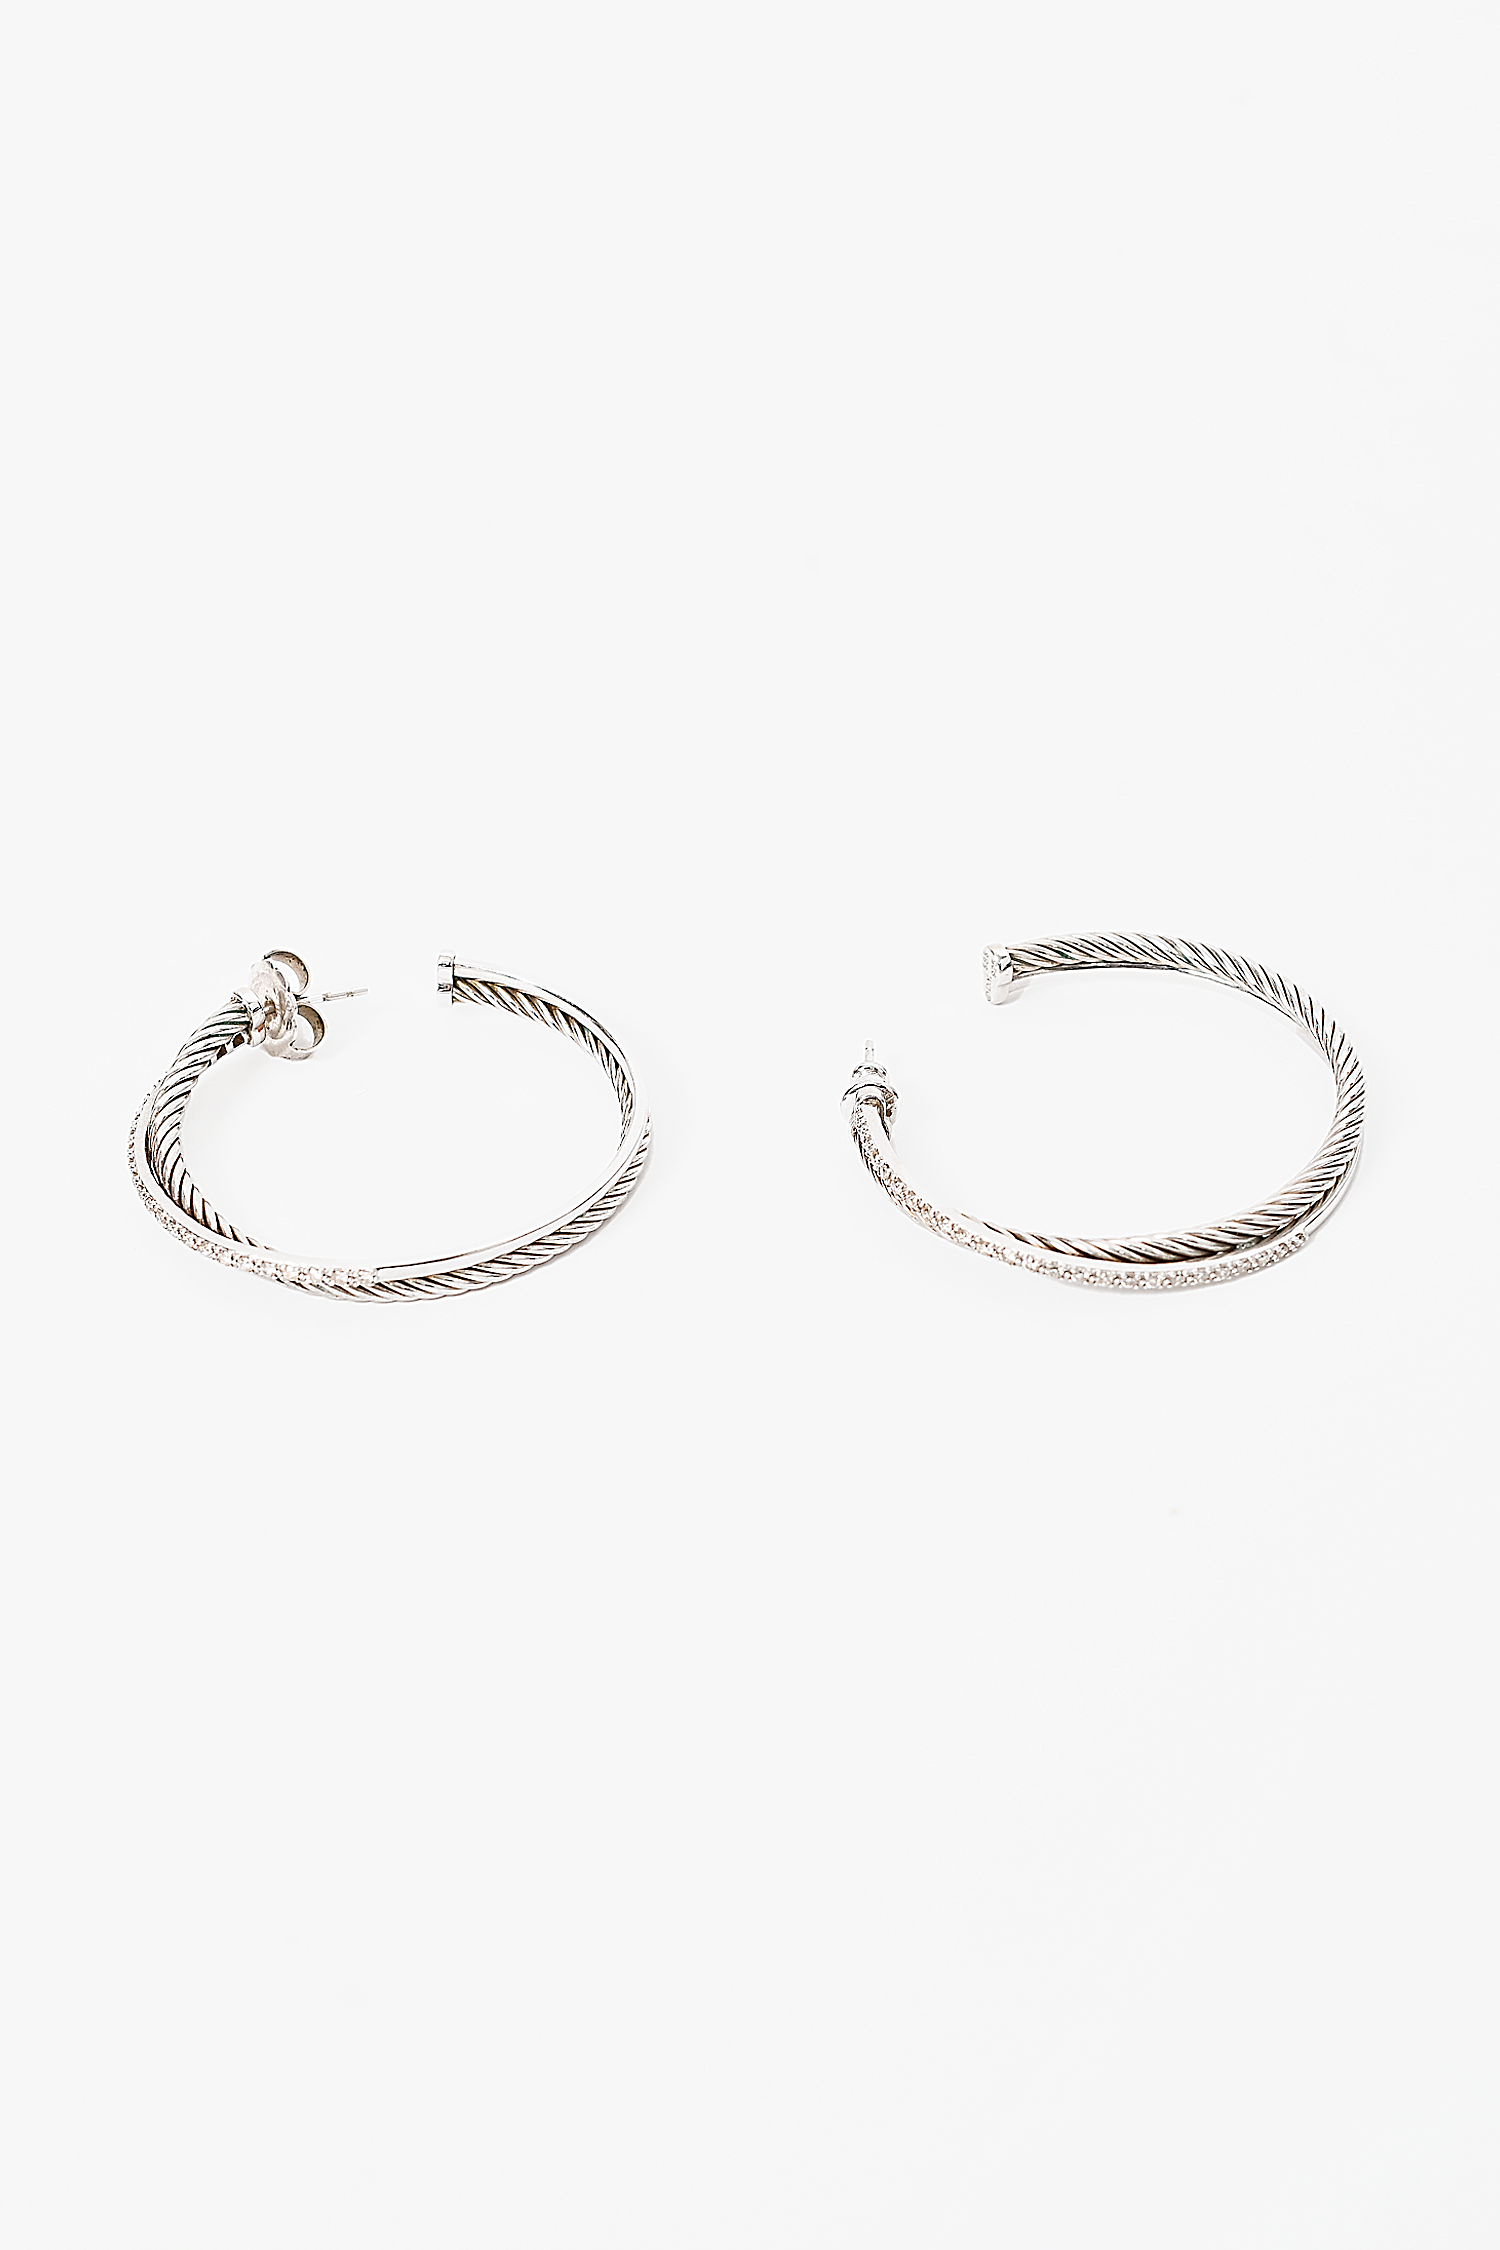 Share more than 127 david yurman crossover earrings super hot - seven ...